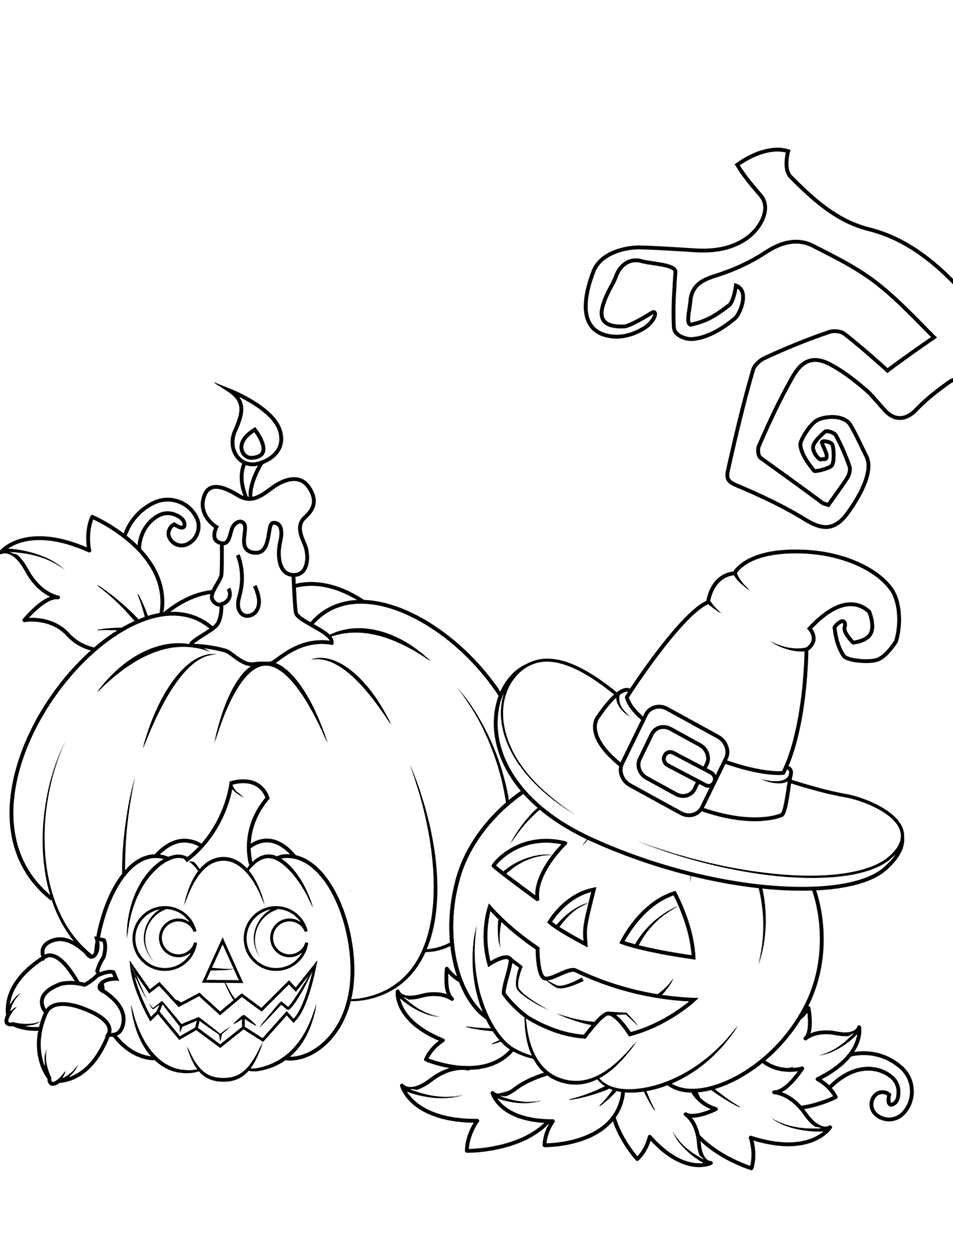 Jack o' Lantern and Pumpkin